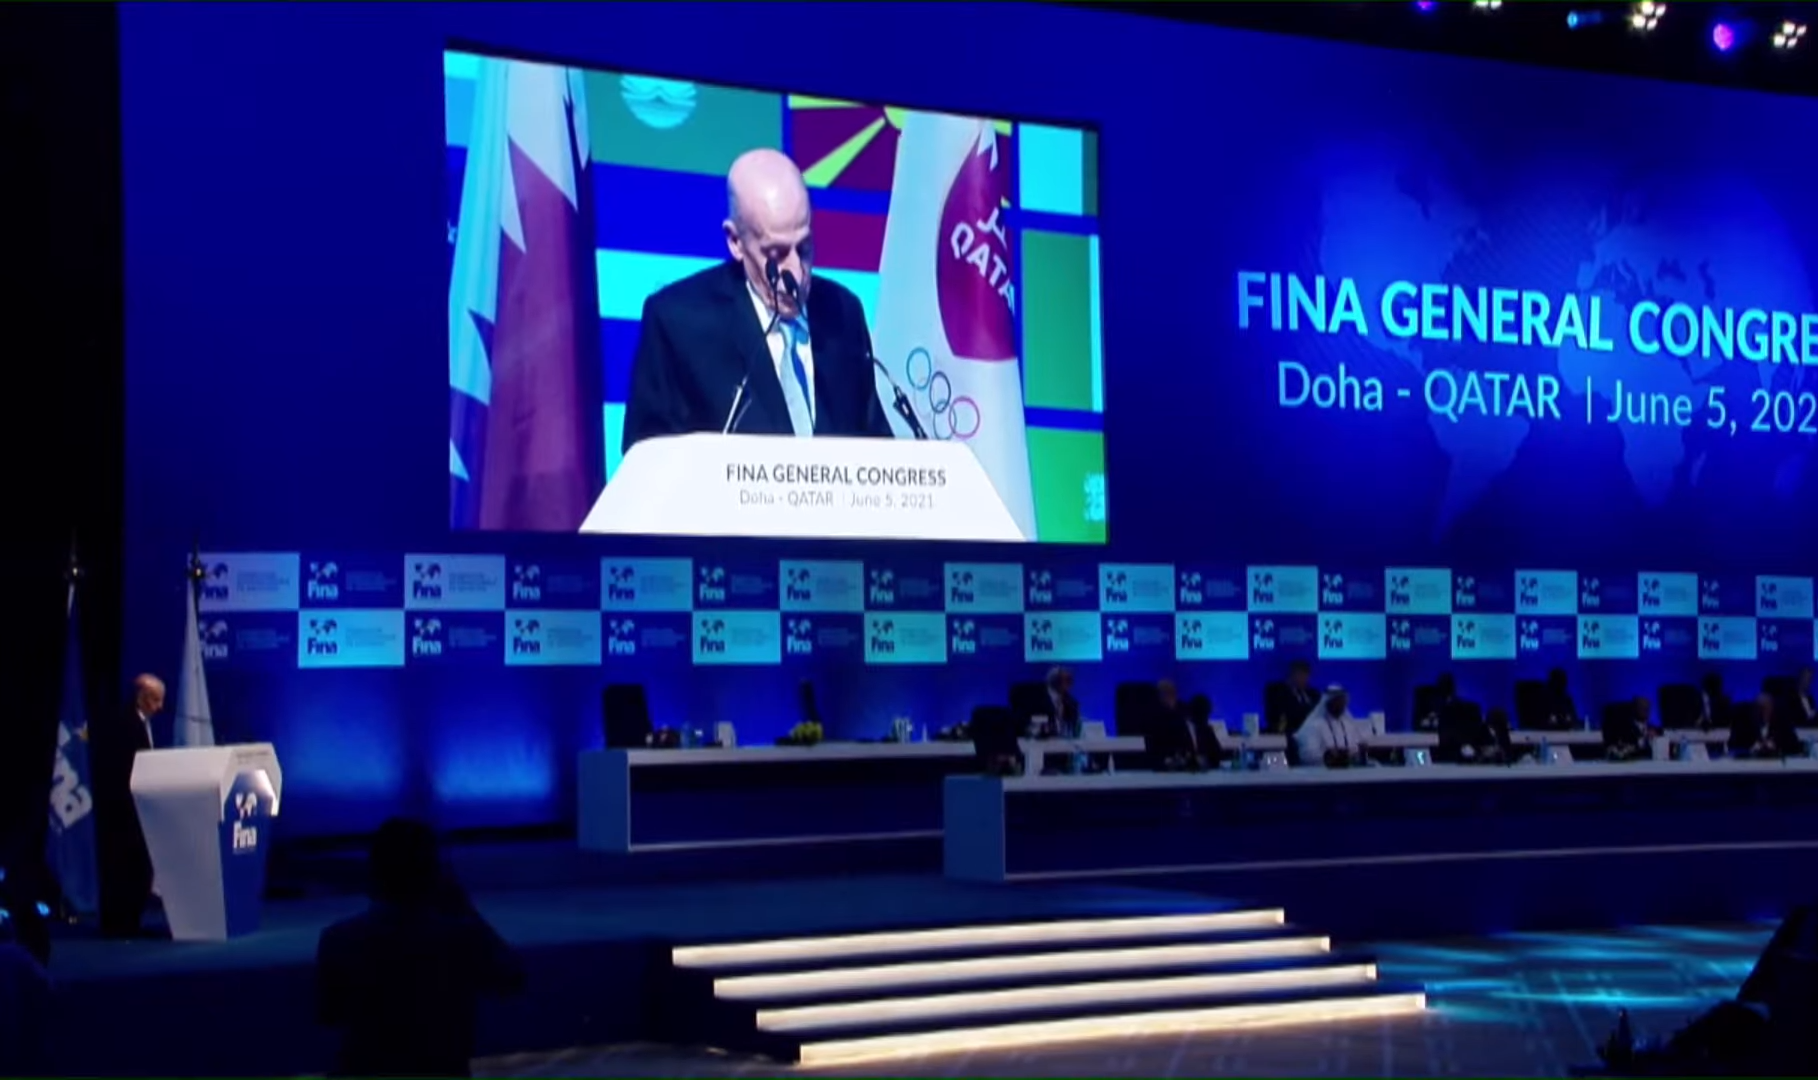 Julio Maglione's 12-year tenure as FINA President came to a close ©FINA